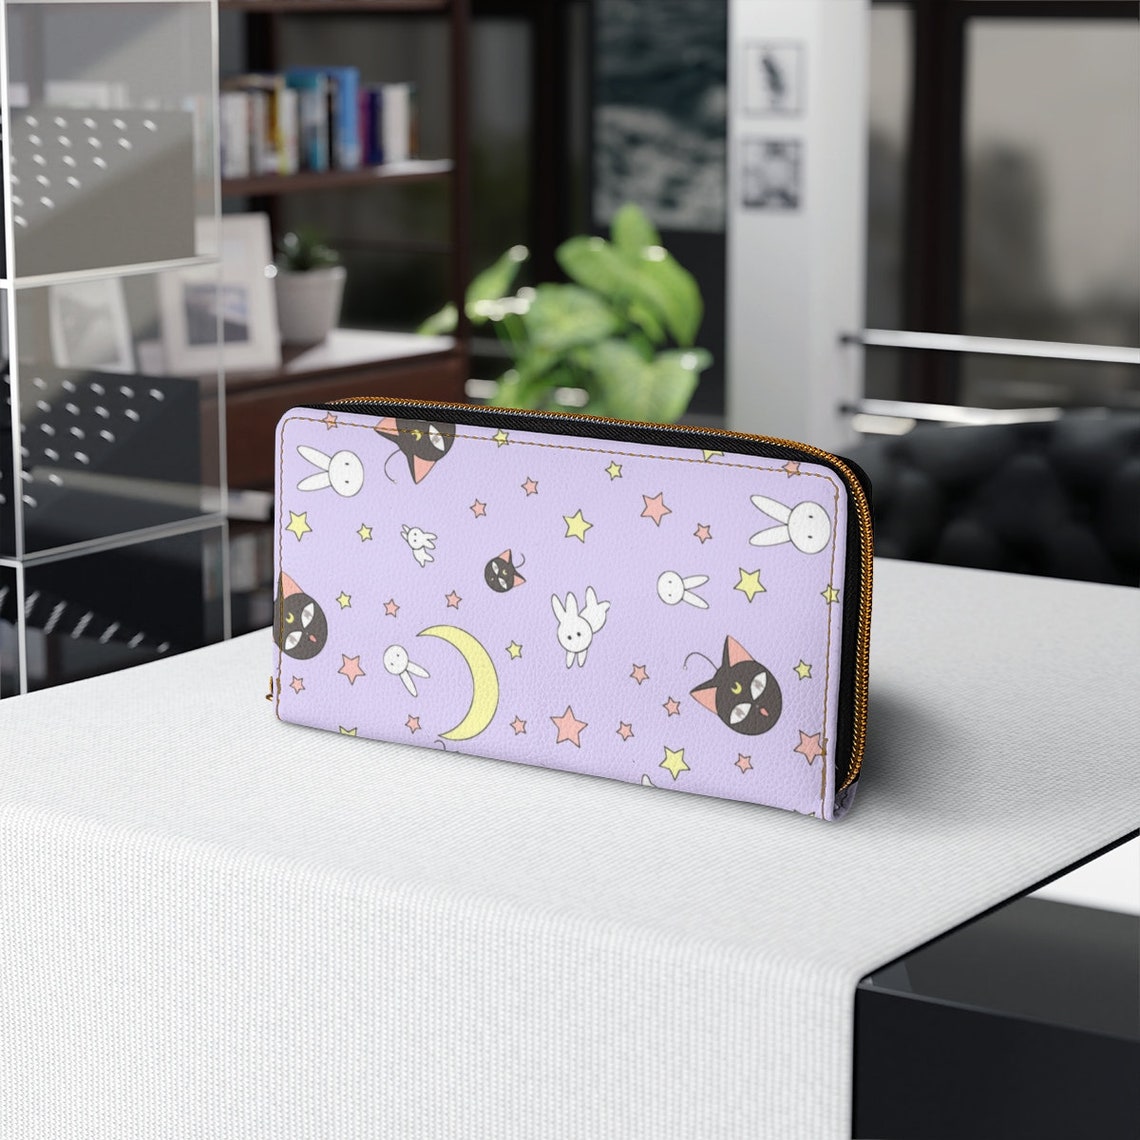 Sailor Moon Wallet Zipper Wallet 7.87 X 4.33 - Etsy